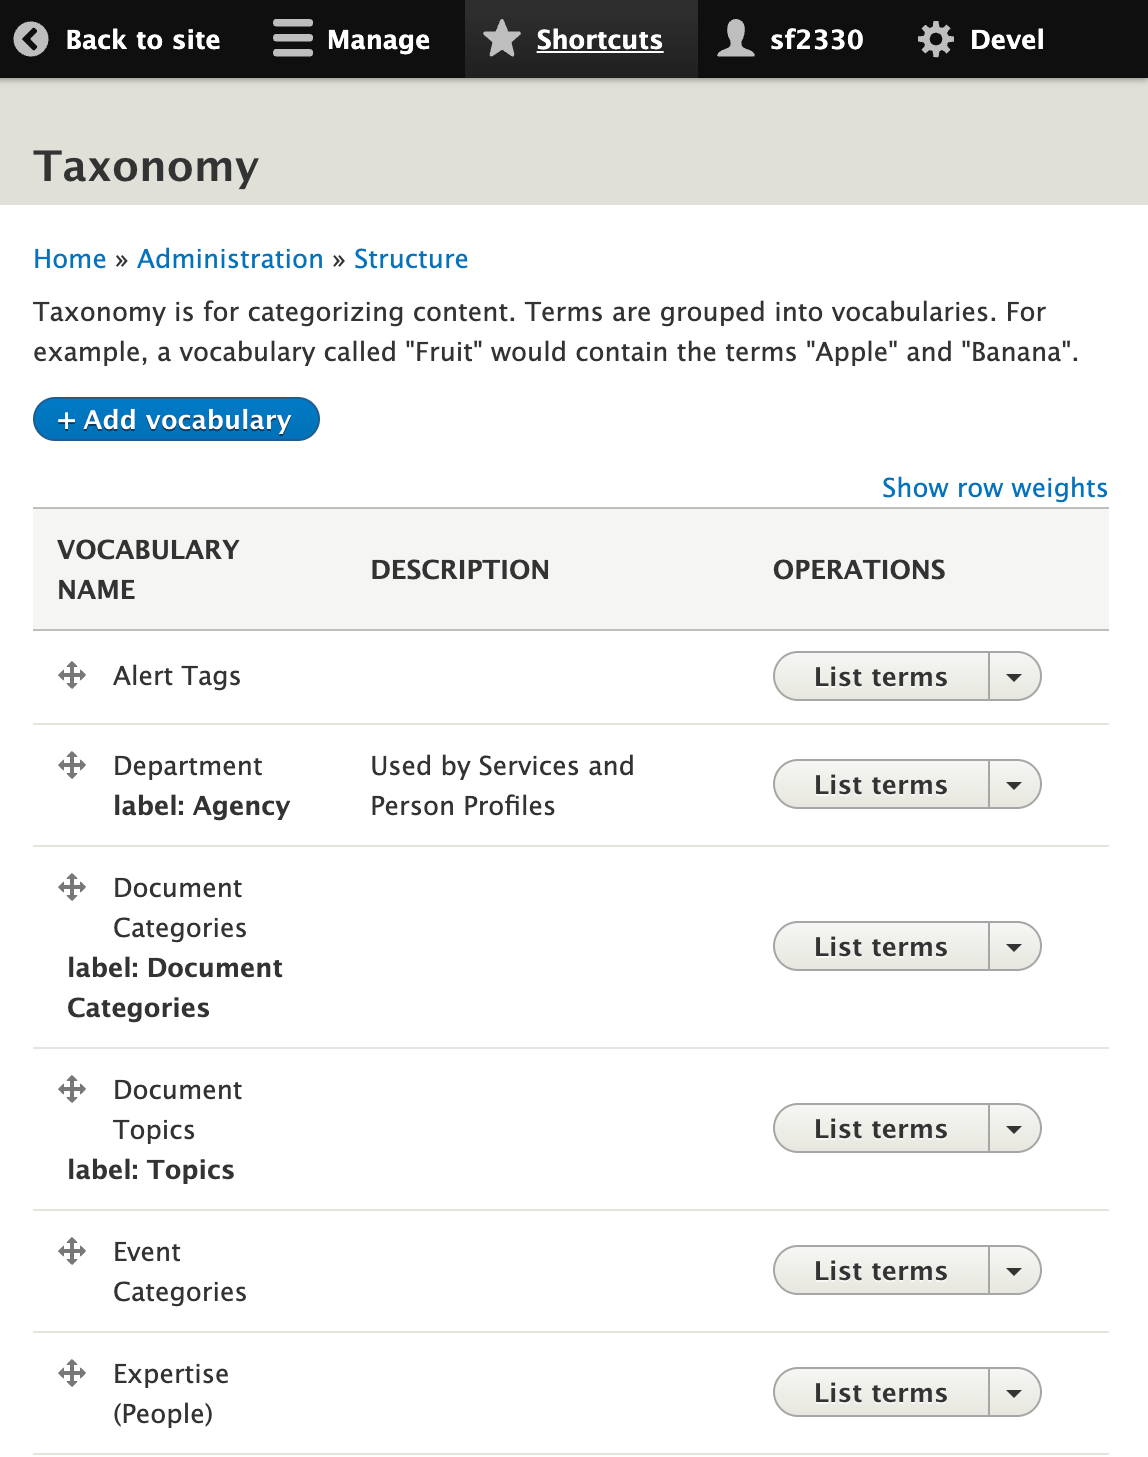 listing of all taxonomies